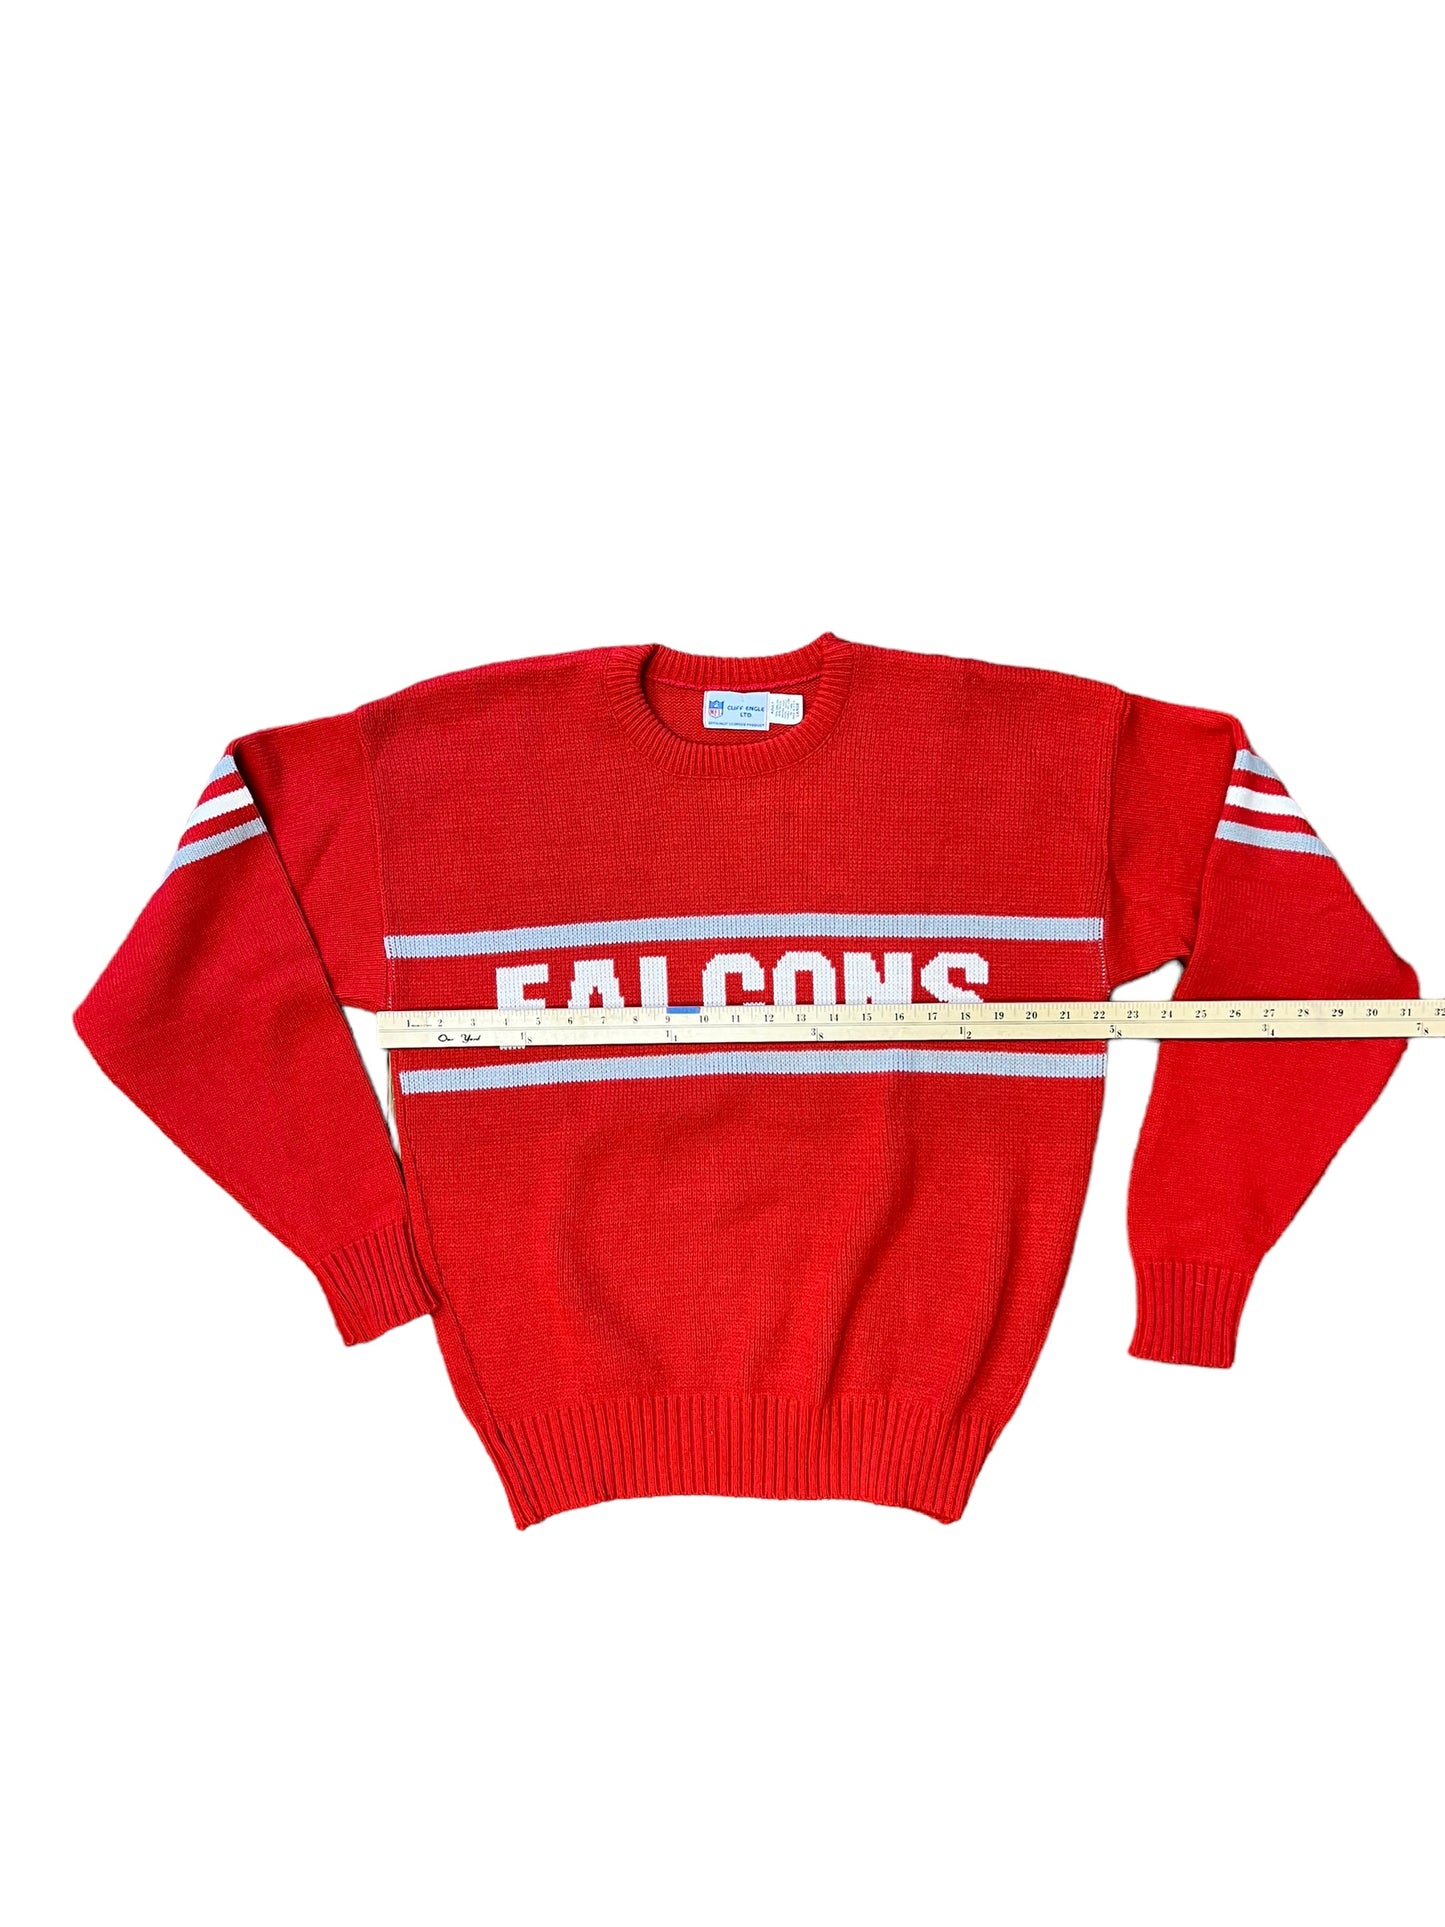 Vintage Atlanta Falcons Knit Sweater - Large